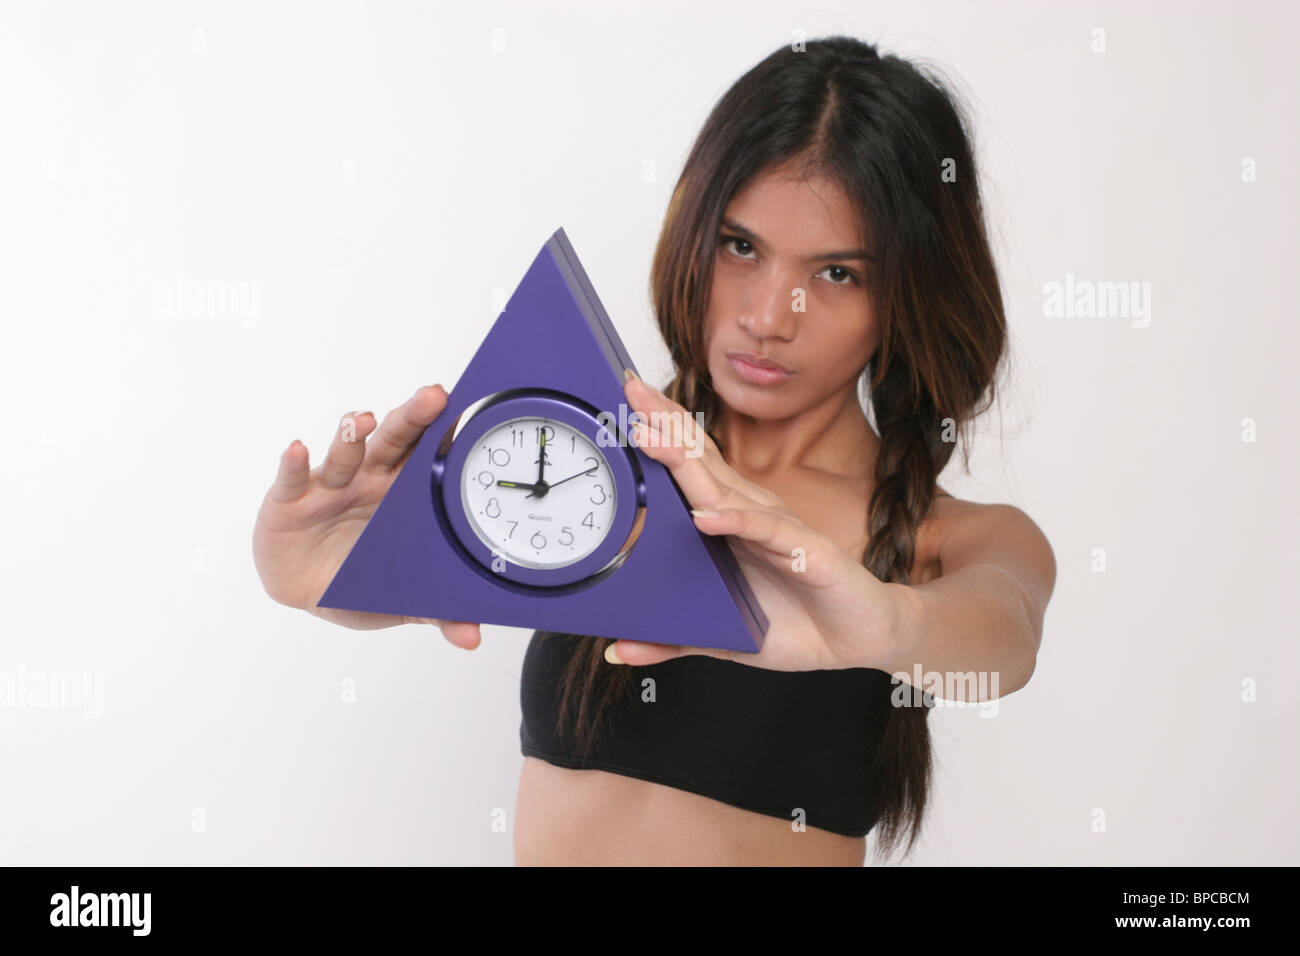 girl show triangle clock watch Stock Photo